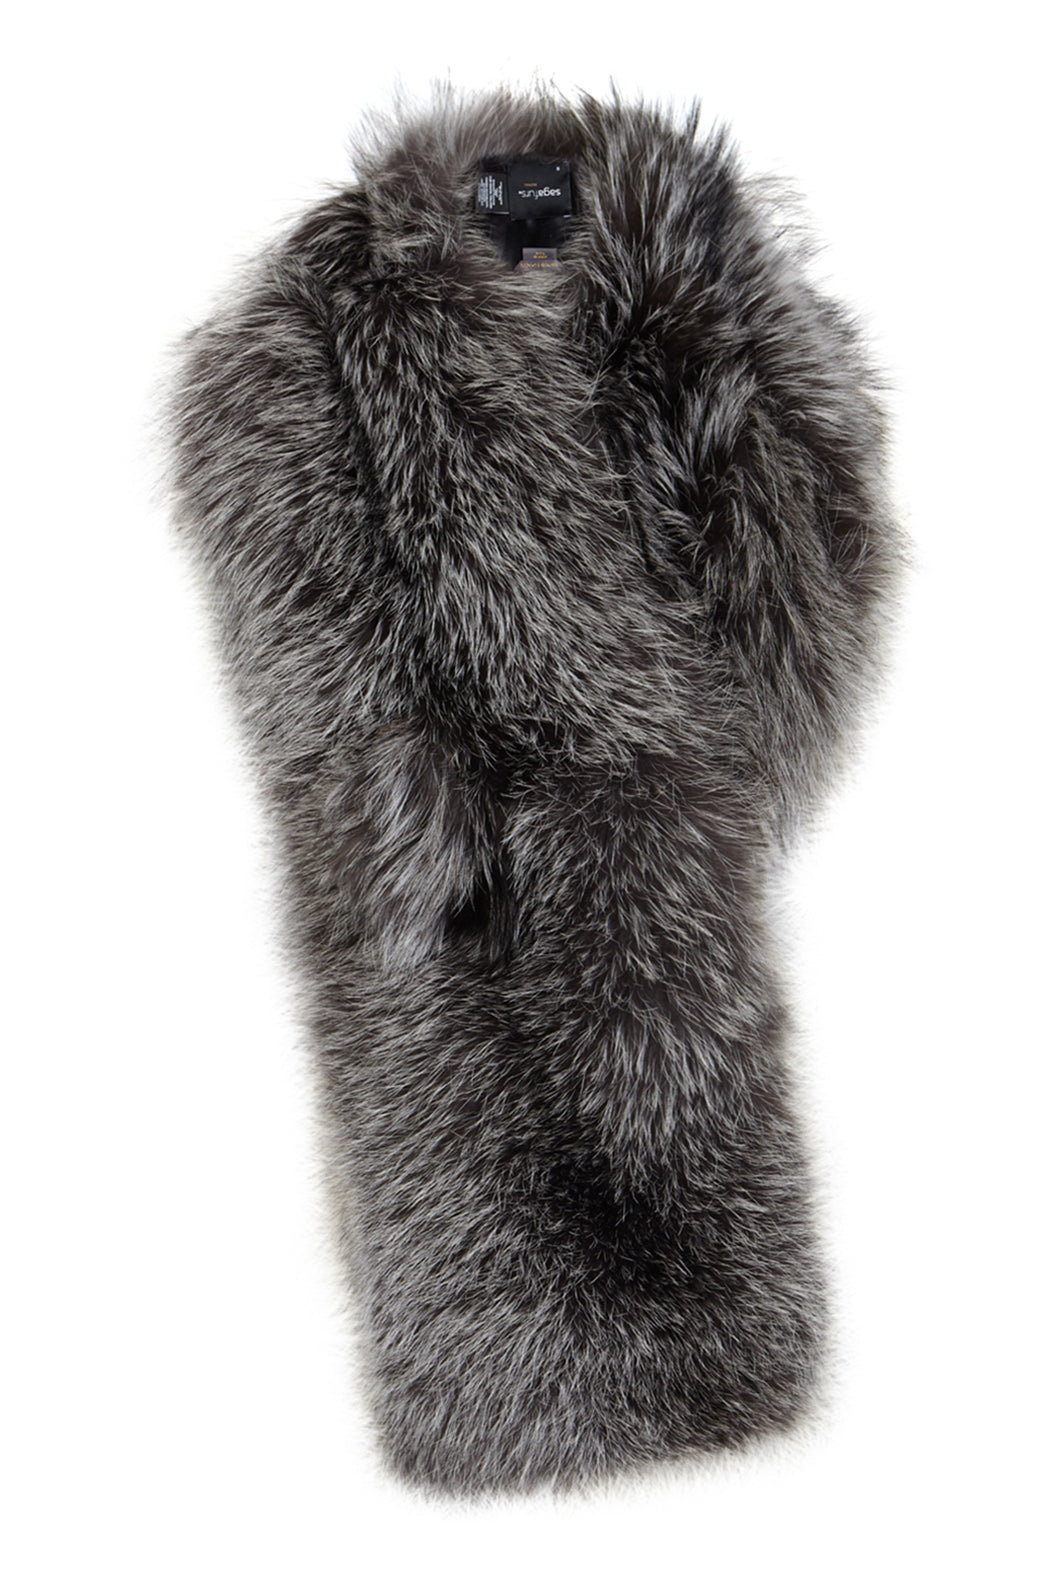 Arabella Silver Fox Fur Scarf Natural